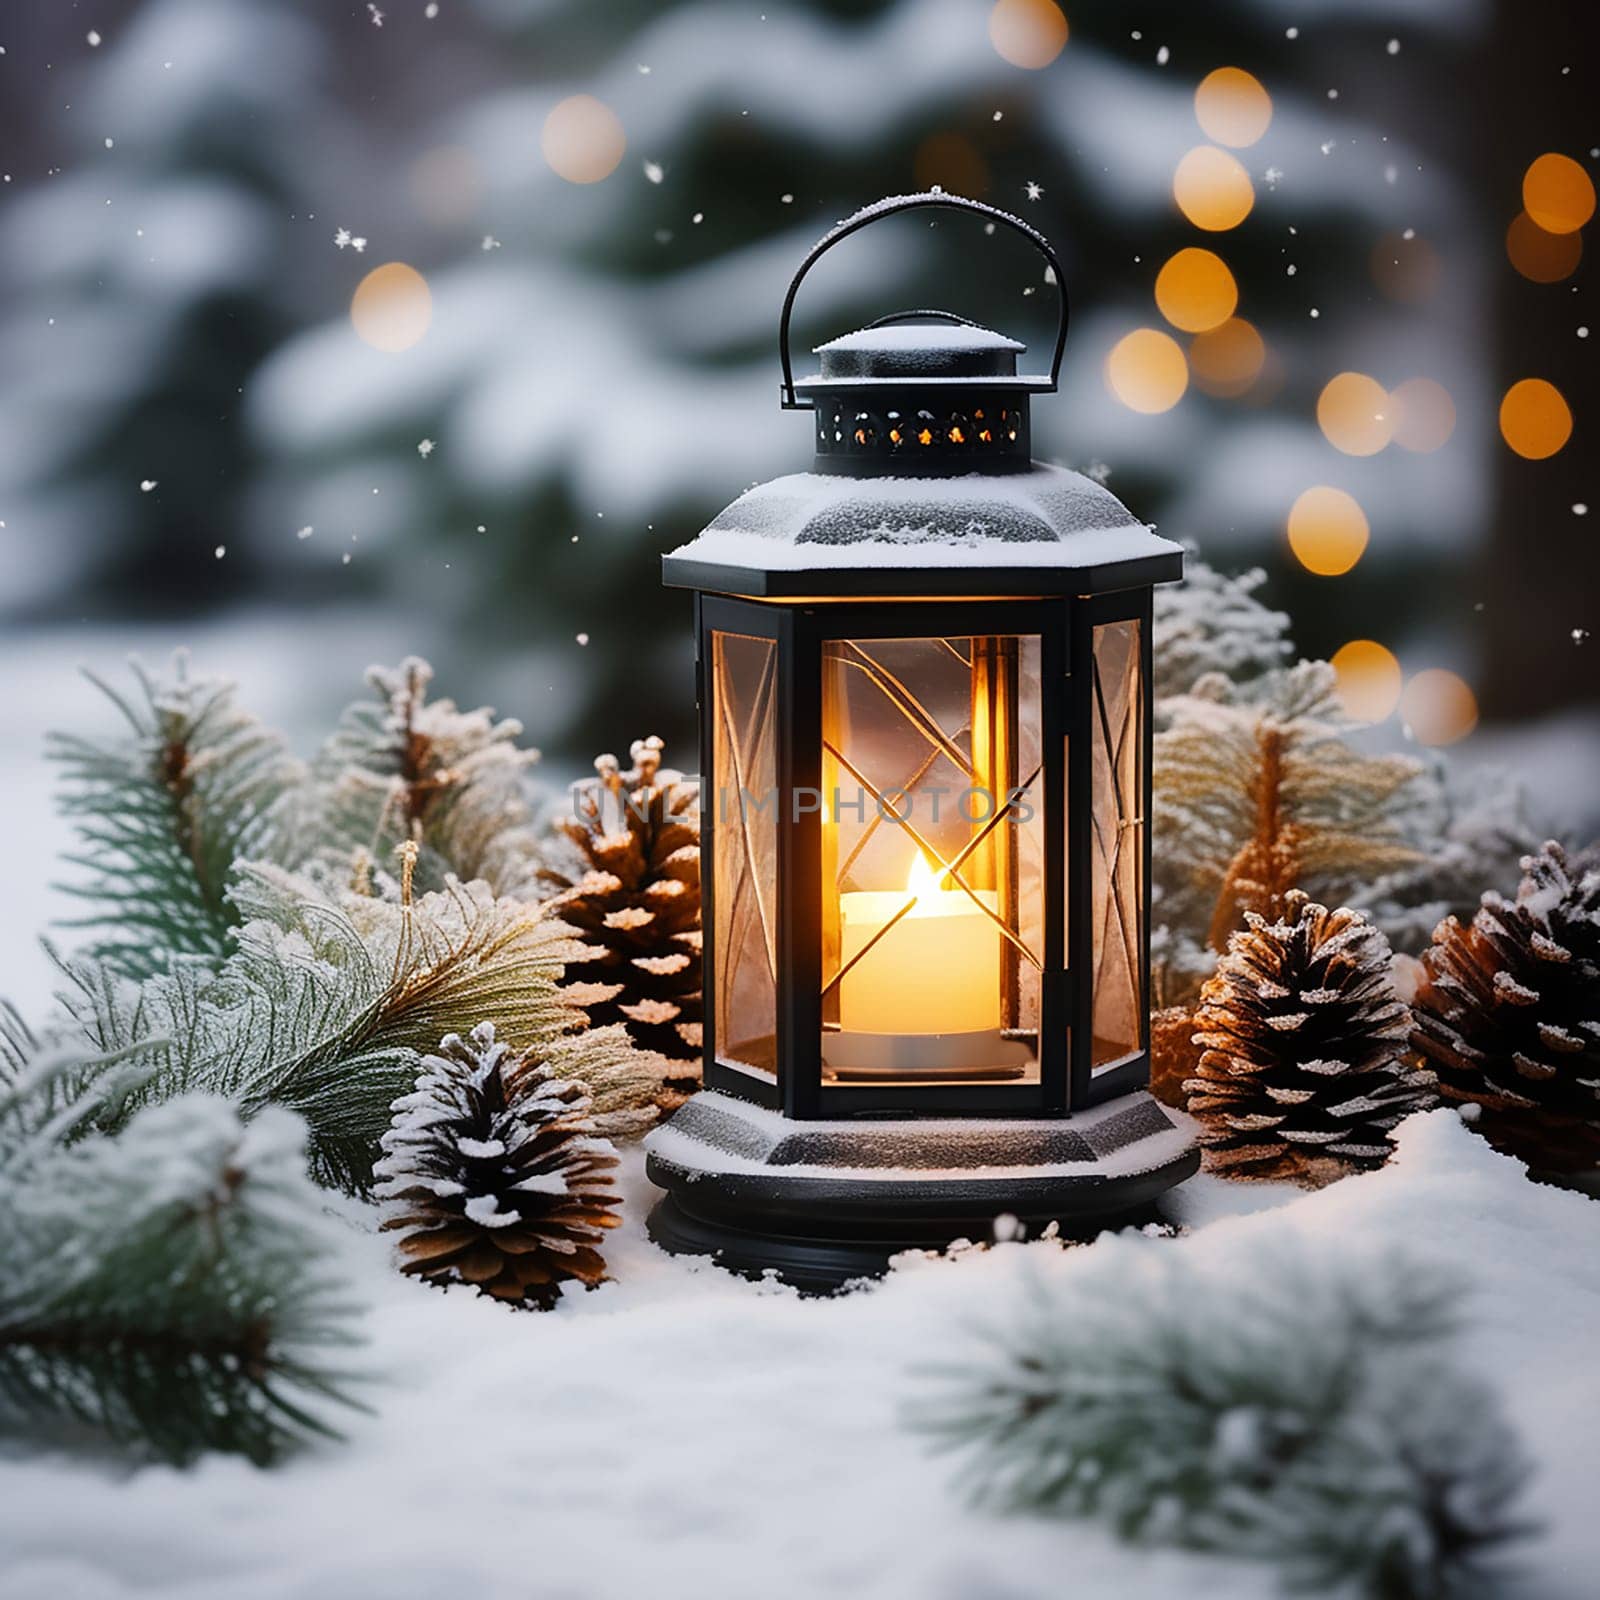 Christmas Lantern in Snow with Fir Tree - Cozy Christmas Scene